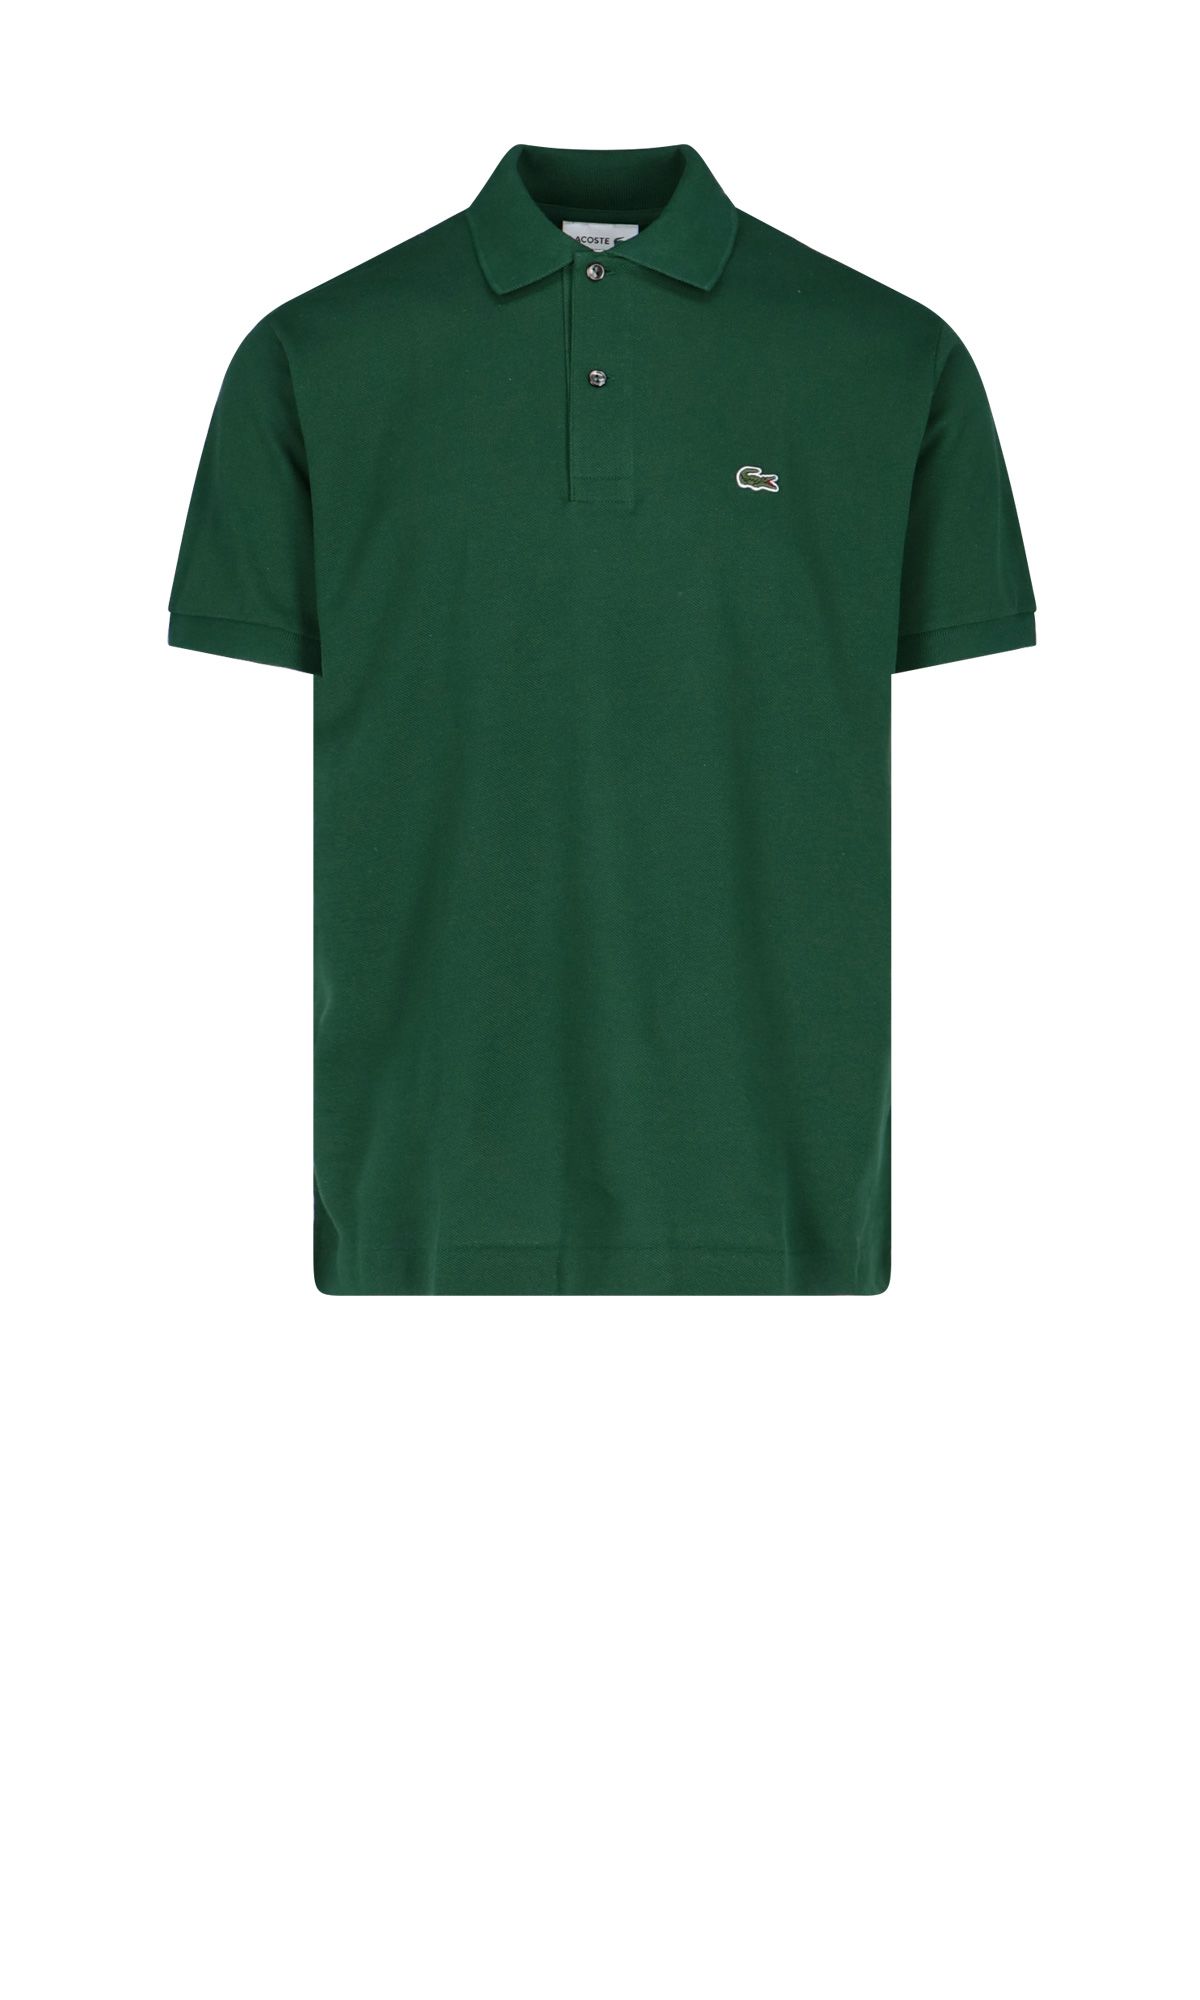 Lacoste Short Sleeve T Shirts Italist Always Like A Sale